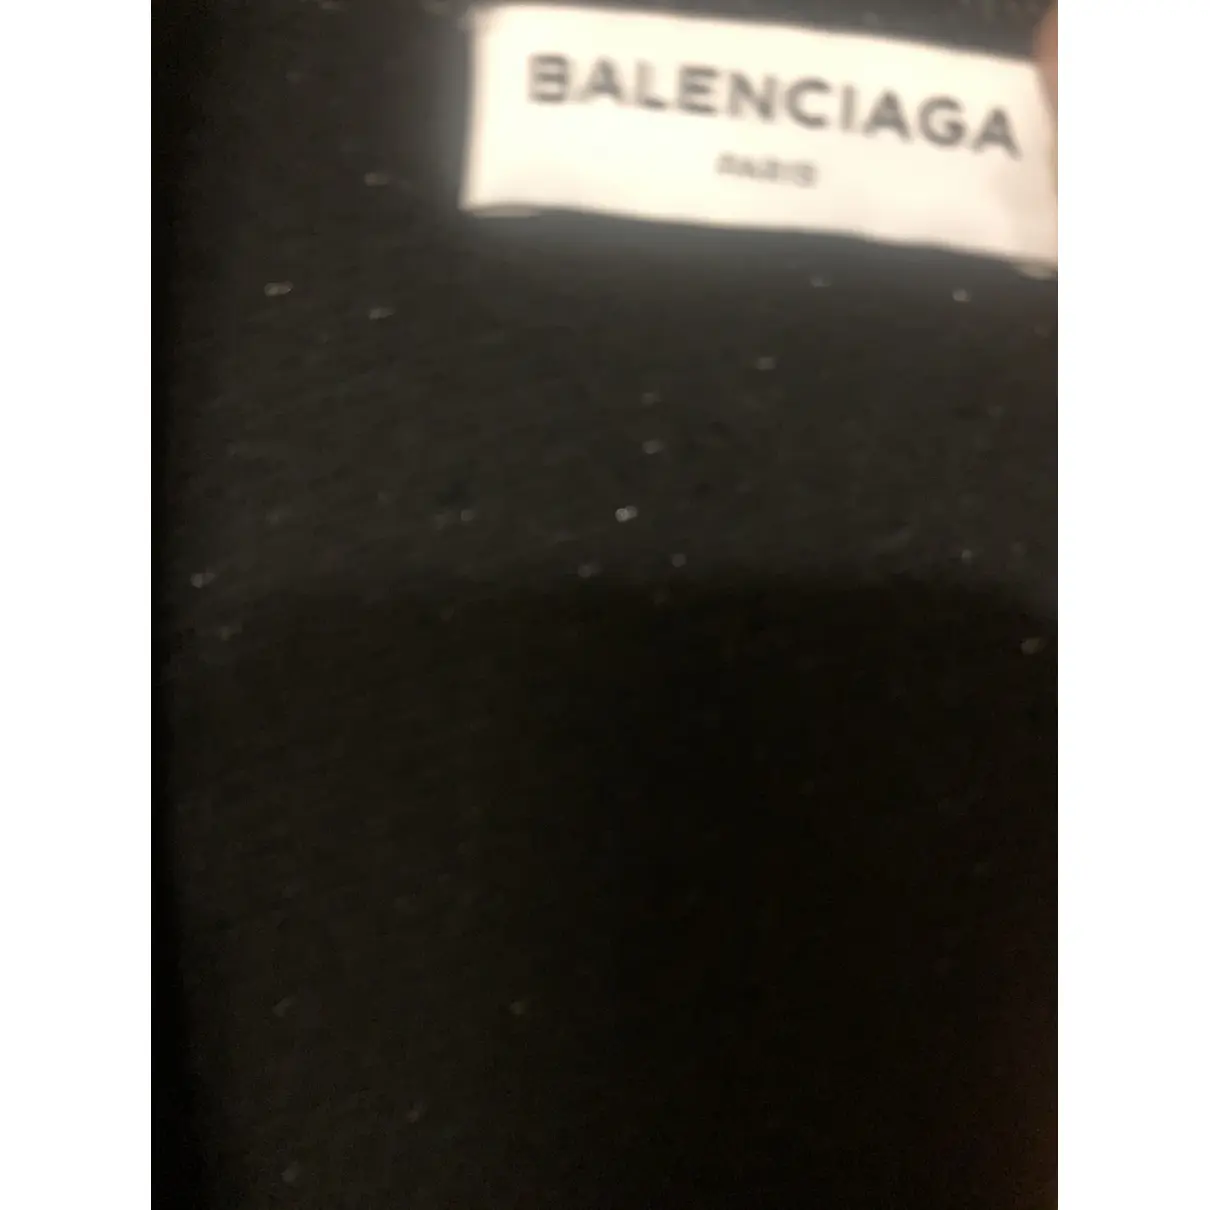 Luxury Balenciaga Knitwear Women